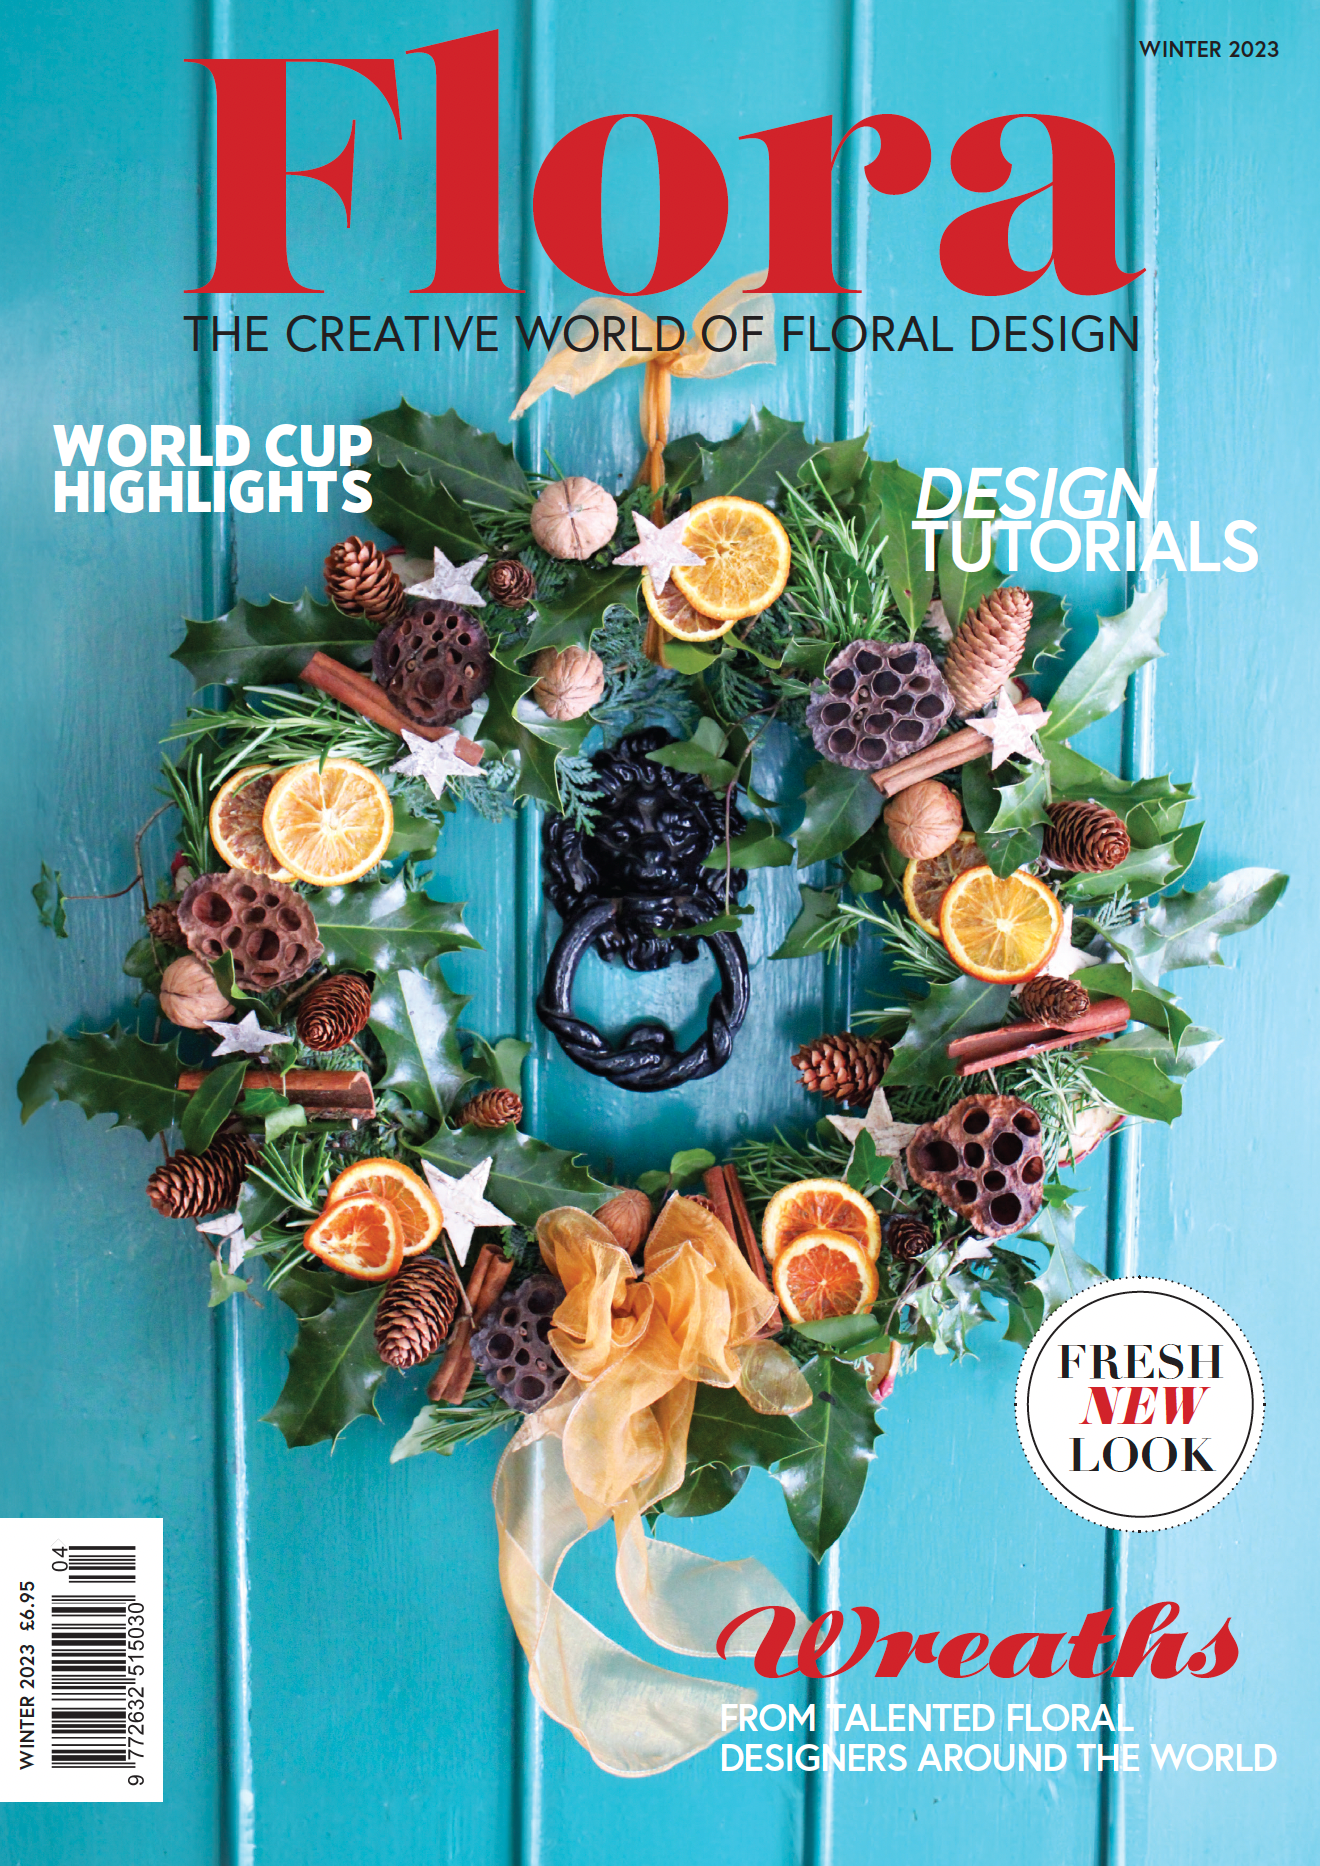 Annual Flora Magazine Print Subscription